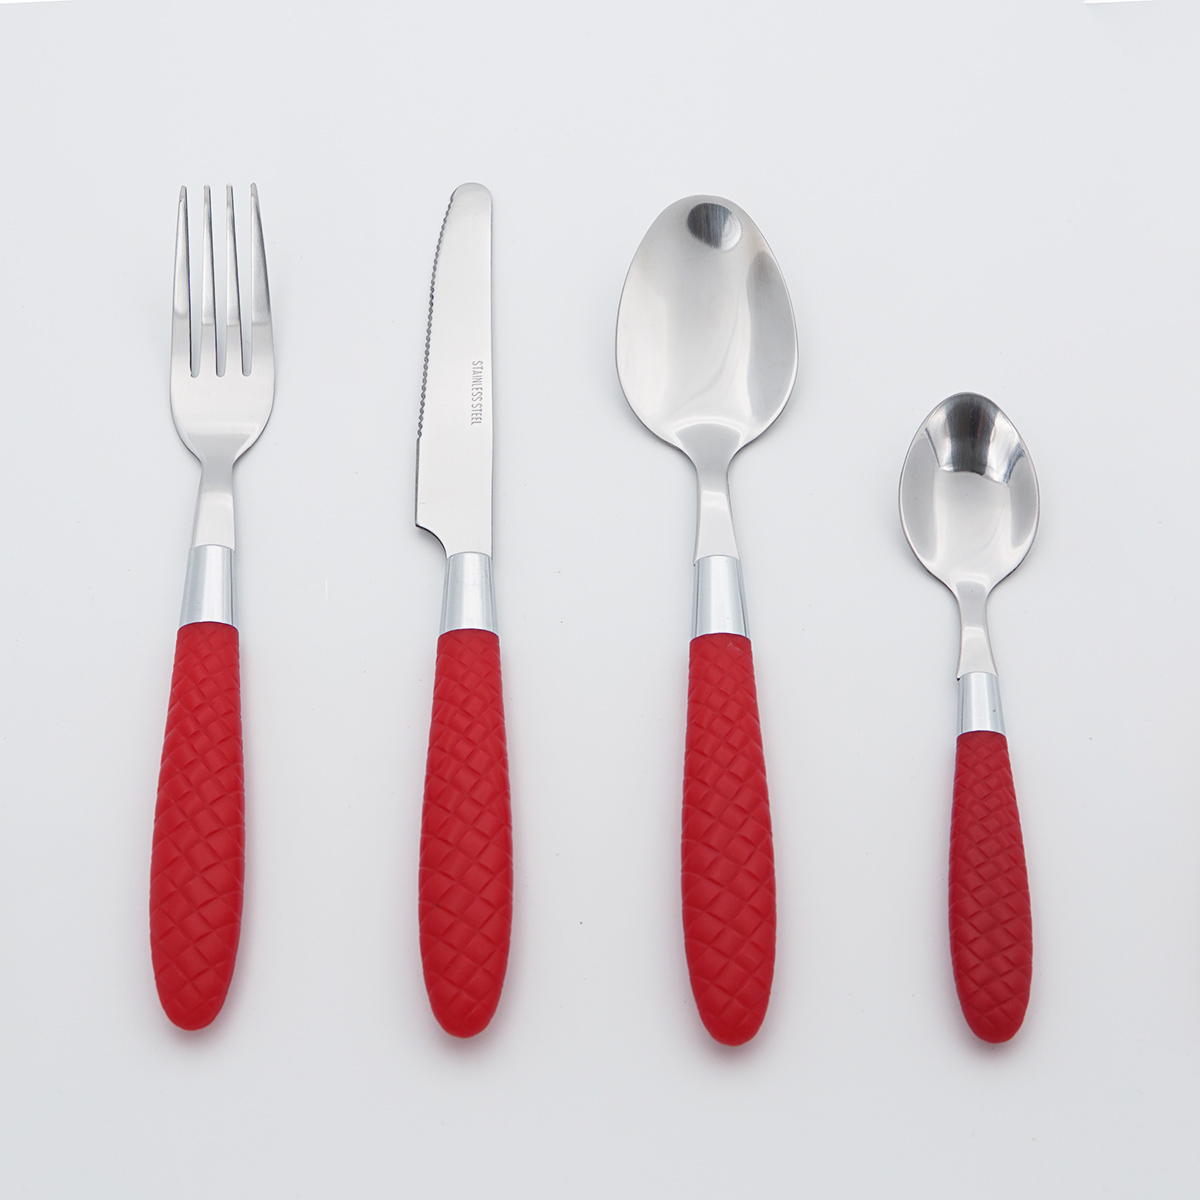 Food Grade Flatware Stainless Steel Cutlery Plastic Handle Wholesale Mirror Polish Silverware Set for Restaurant Hotel